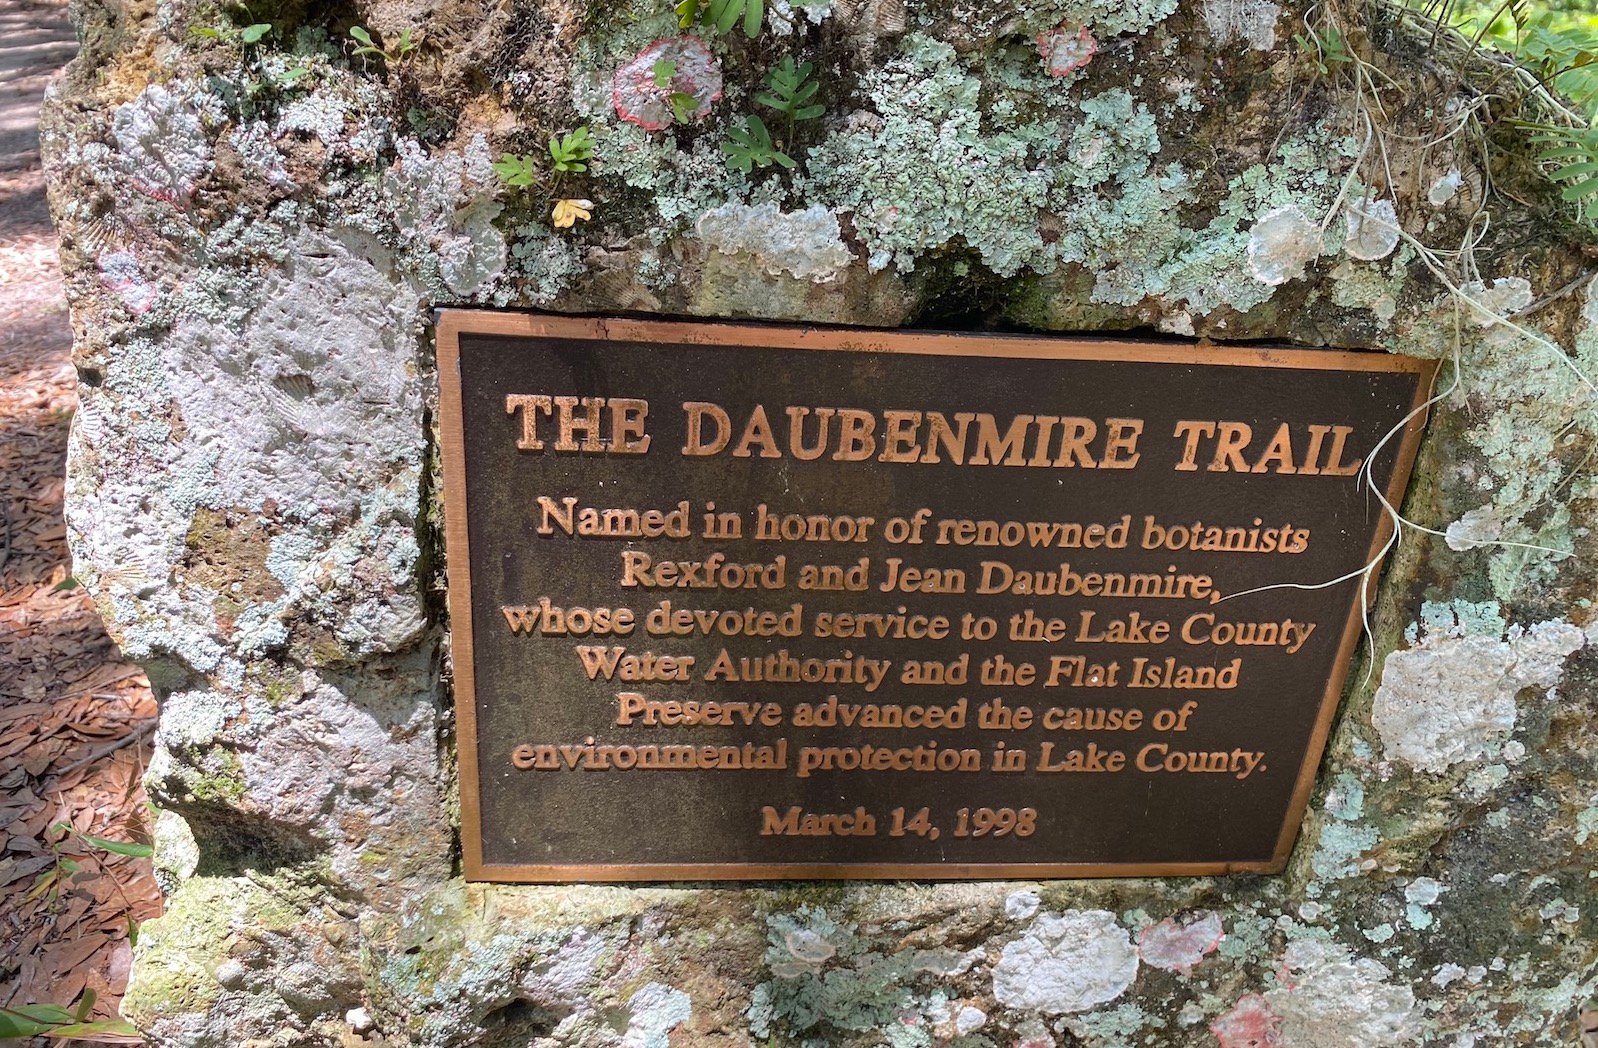 the daubenmire trail at the flat island preserve in leesburg, fl